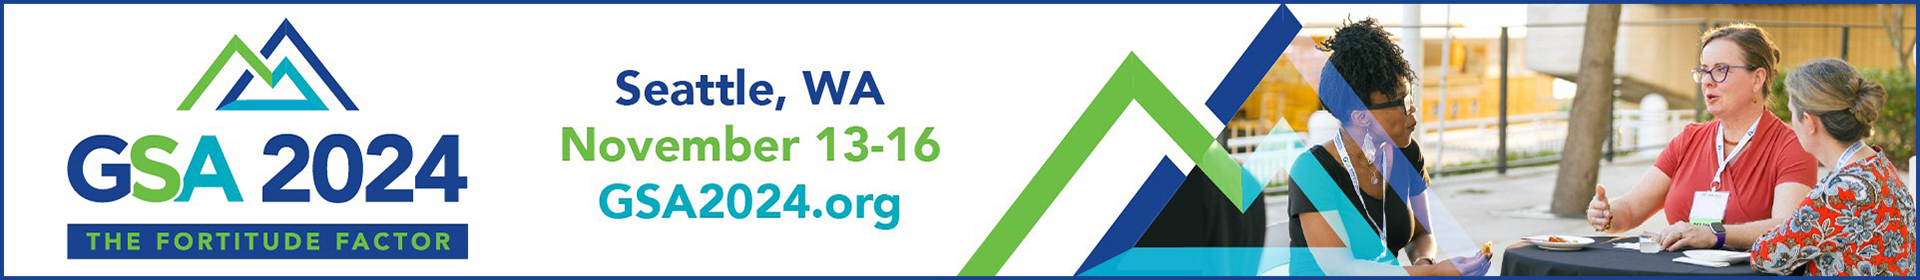 GSA 2024 Annual Scientific Meeting Event Banner